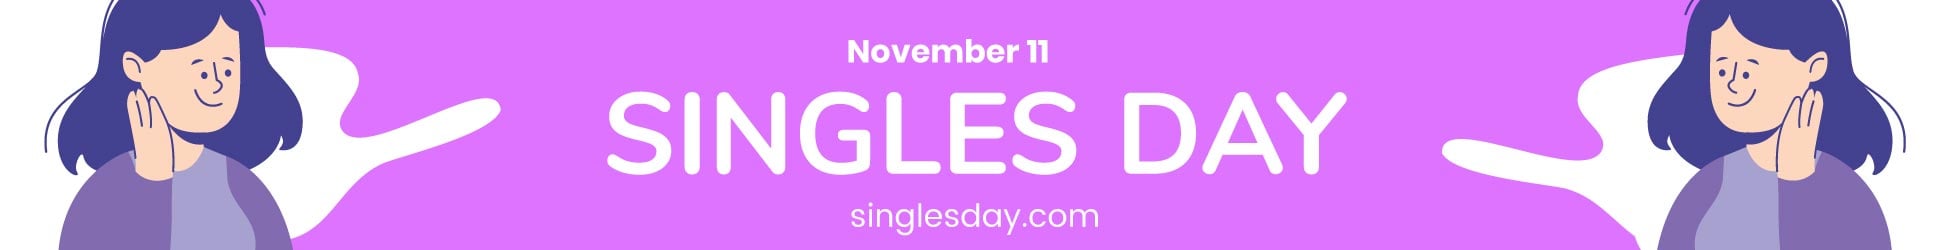 Singles Day Website Banner